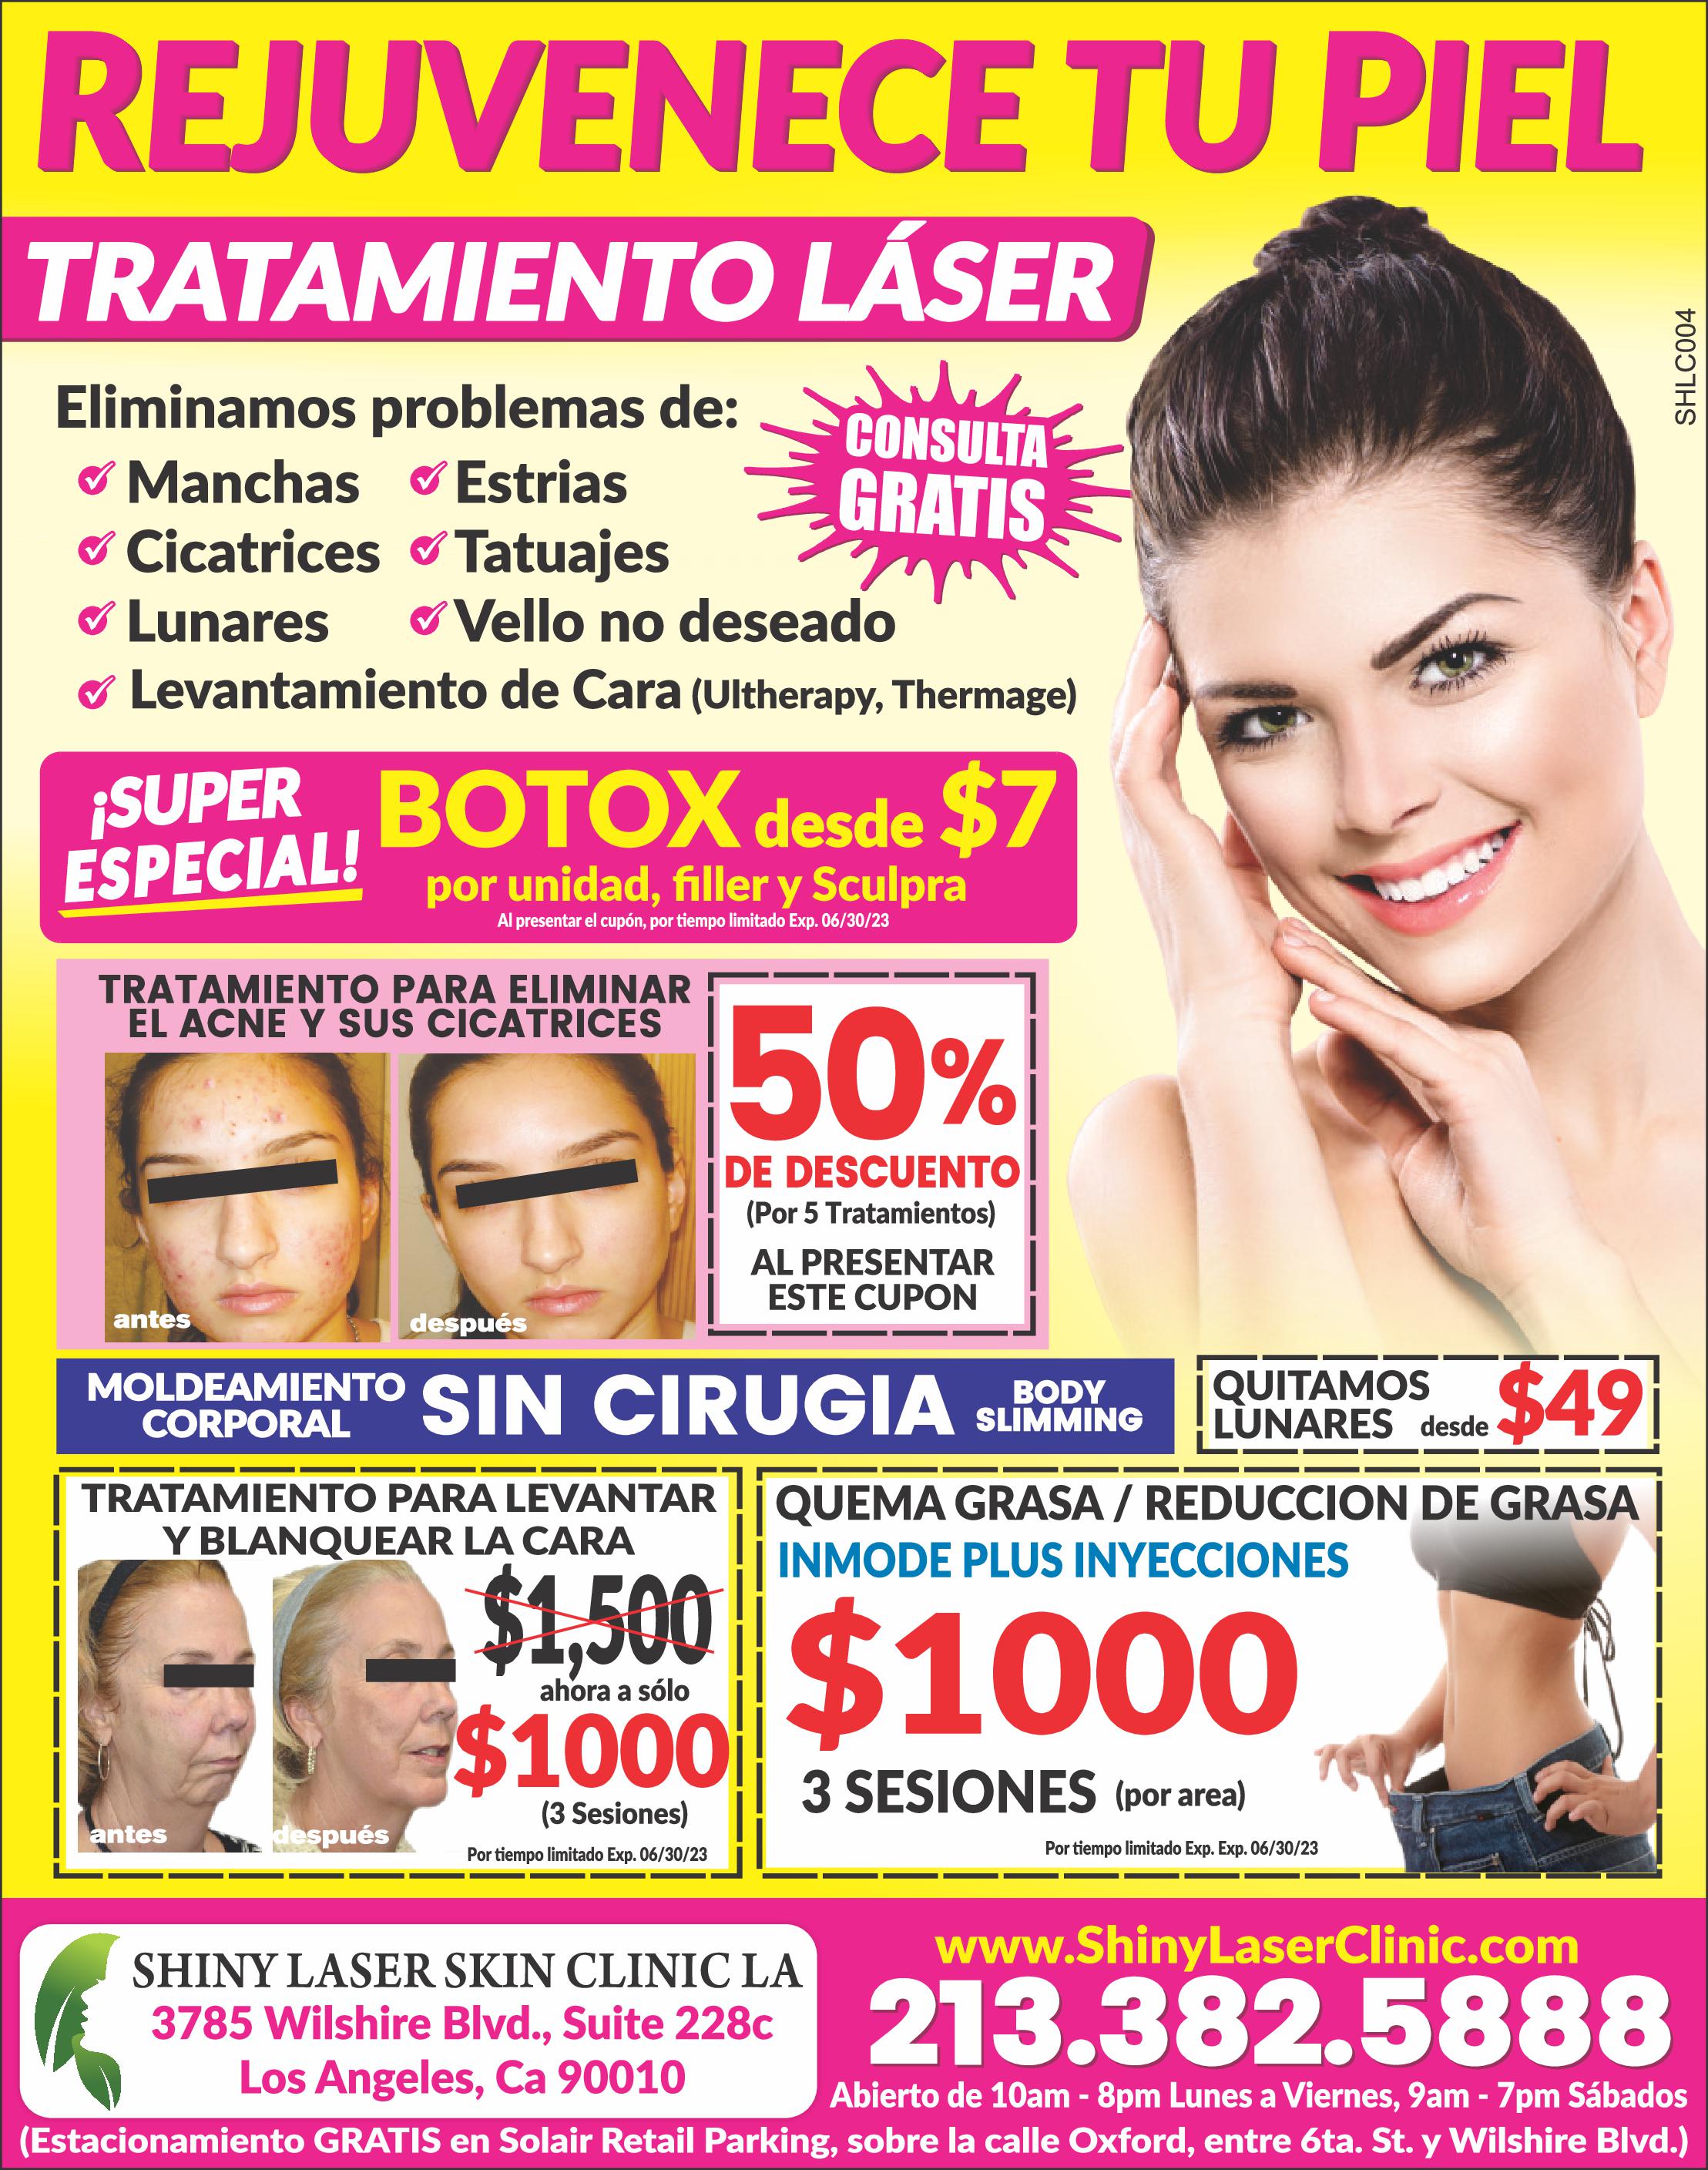 Shiny Laser Skin Clinic La